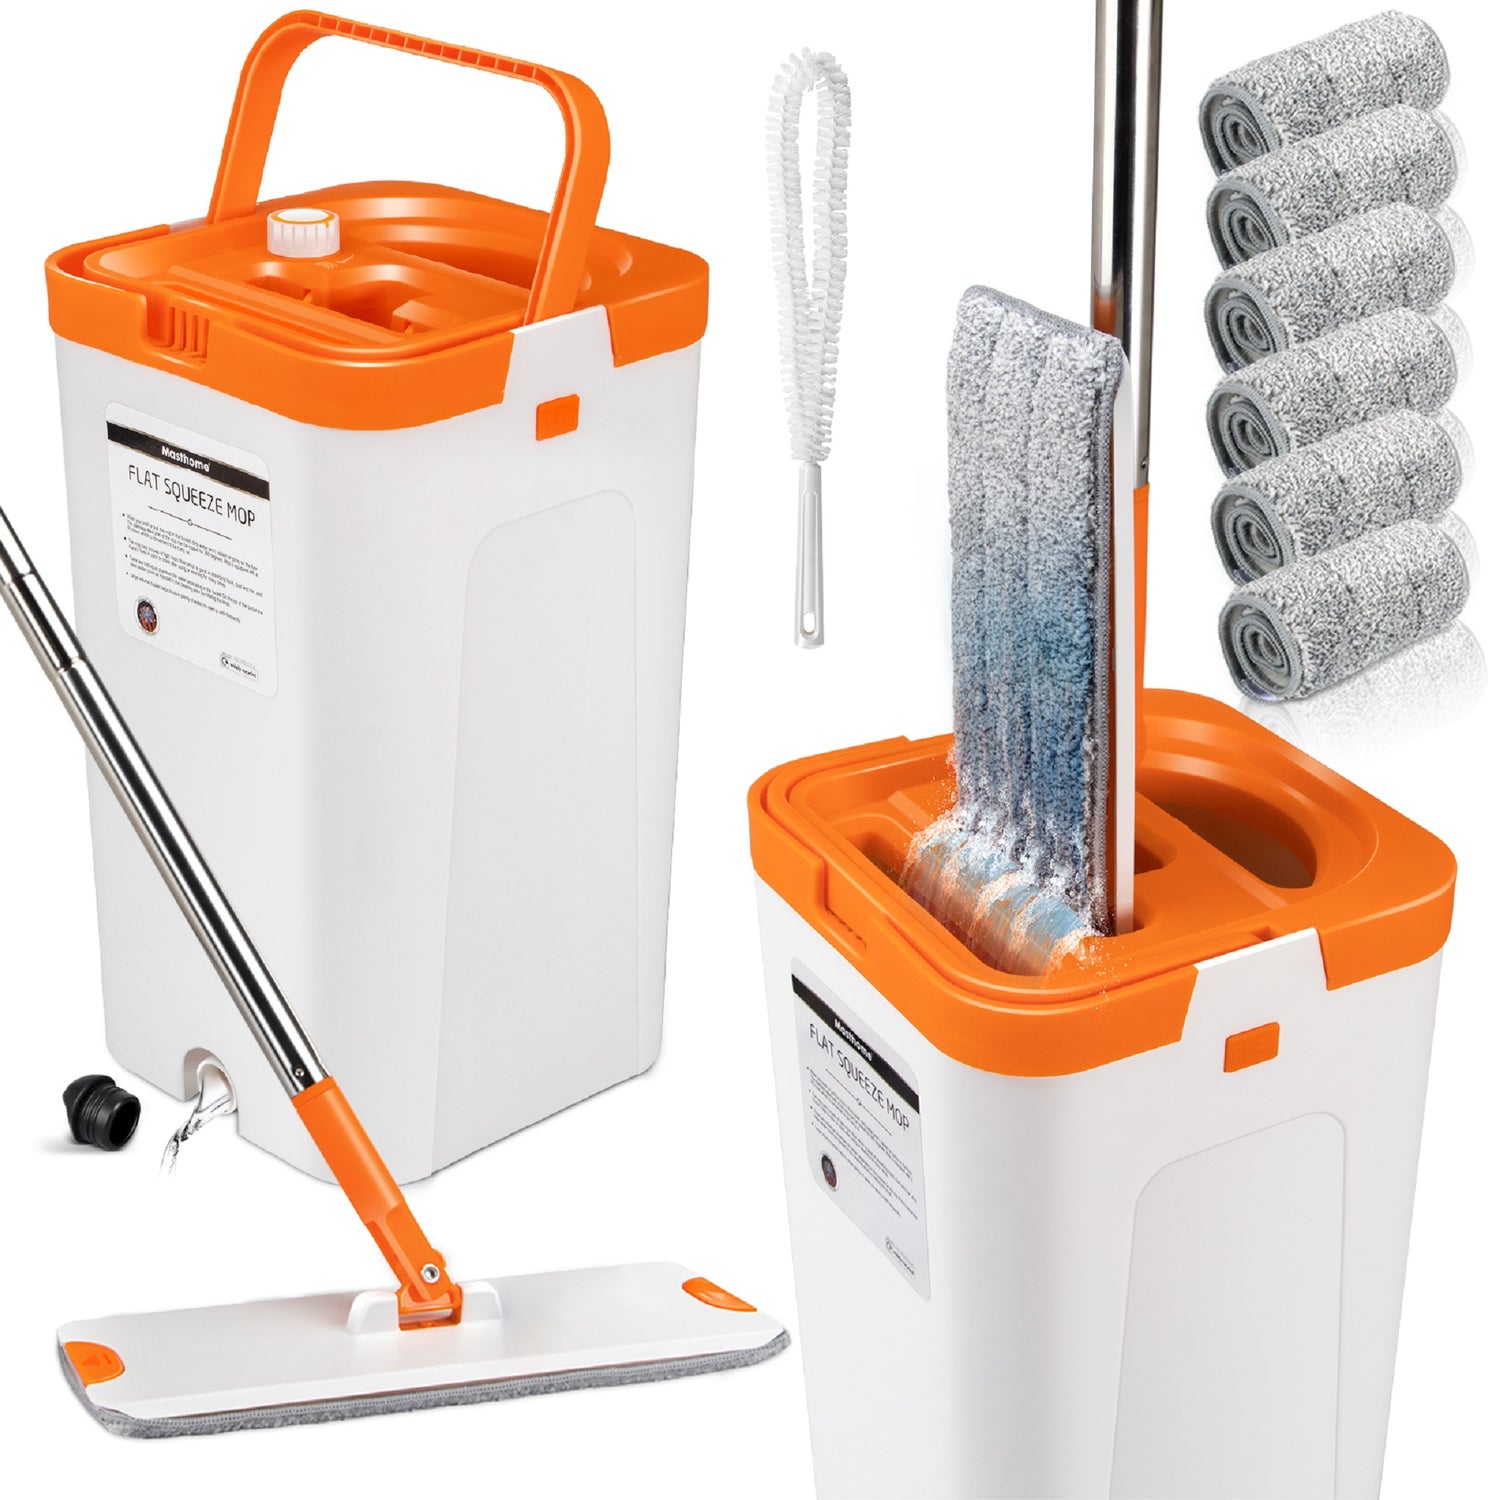 Self cleaning mop 2. Швабра Masthome, длина 141 см. Self-Cleaning Mop (самоочистка и отжим). Kit seau essoreur Wringer Bucket Kit.